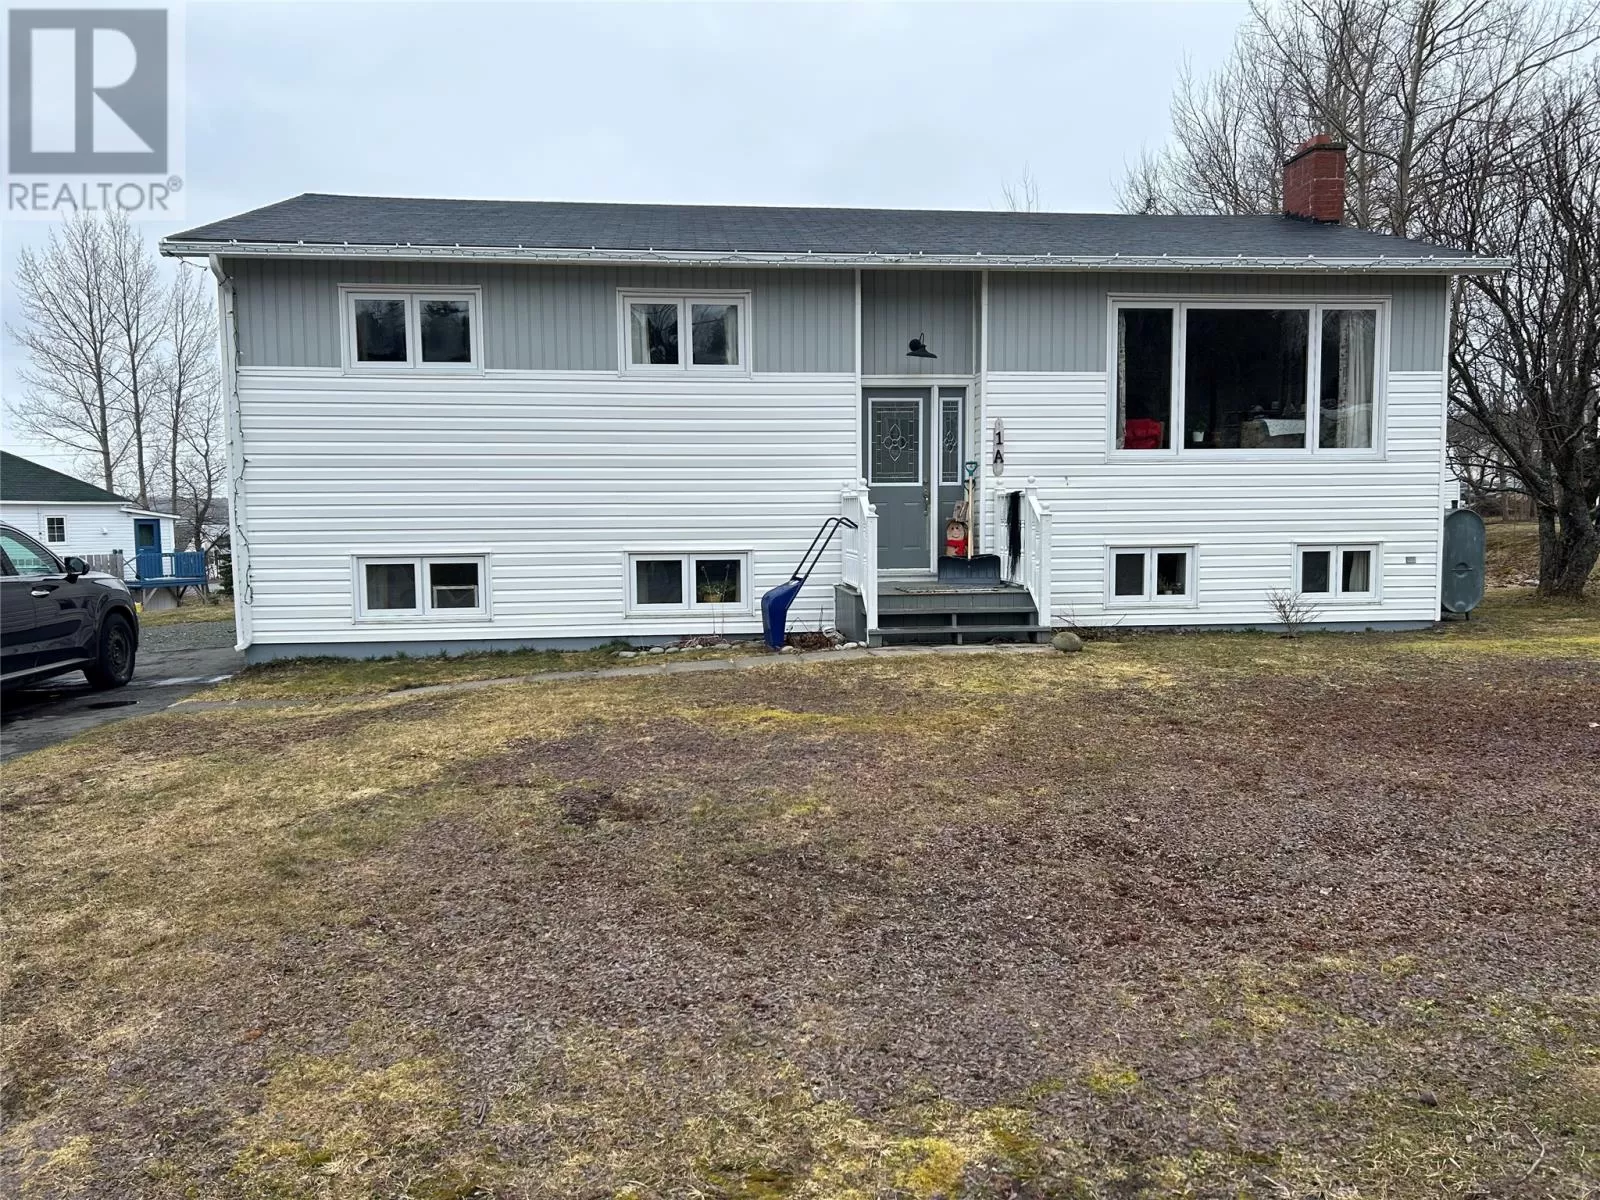 House for rent: 1a Rushann Street, Lewisporte, Newfoundland & Labrador